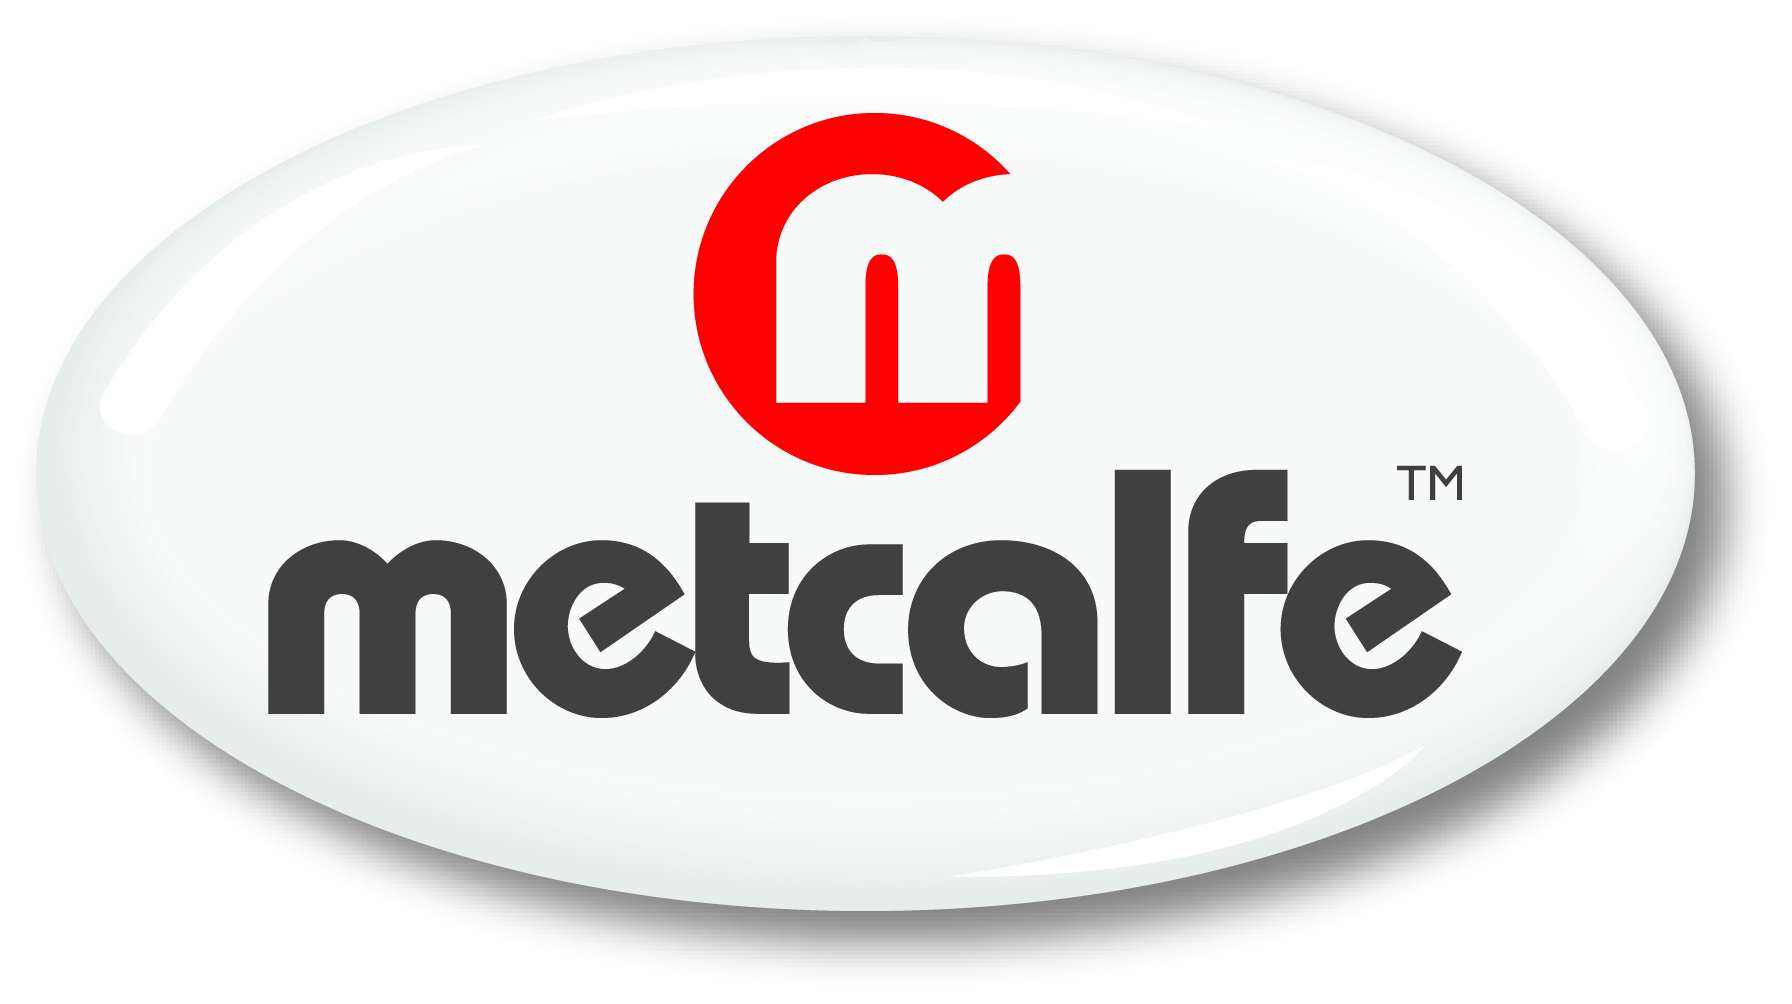 Metcalfe Catering Equipment Ltd